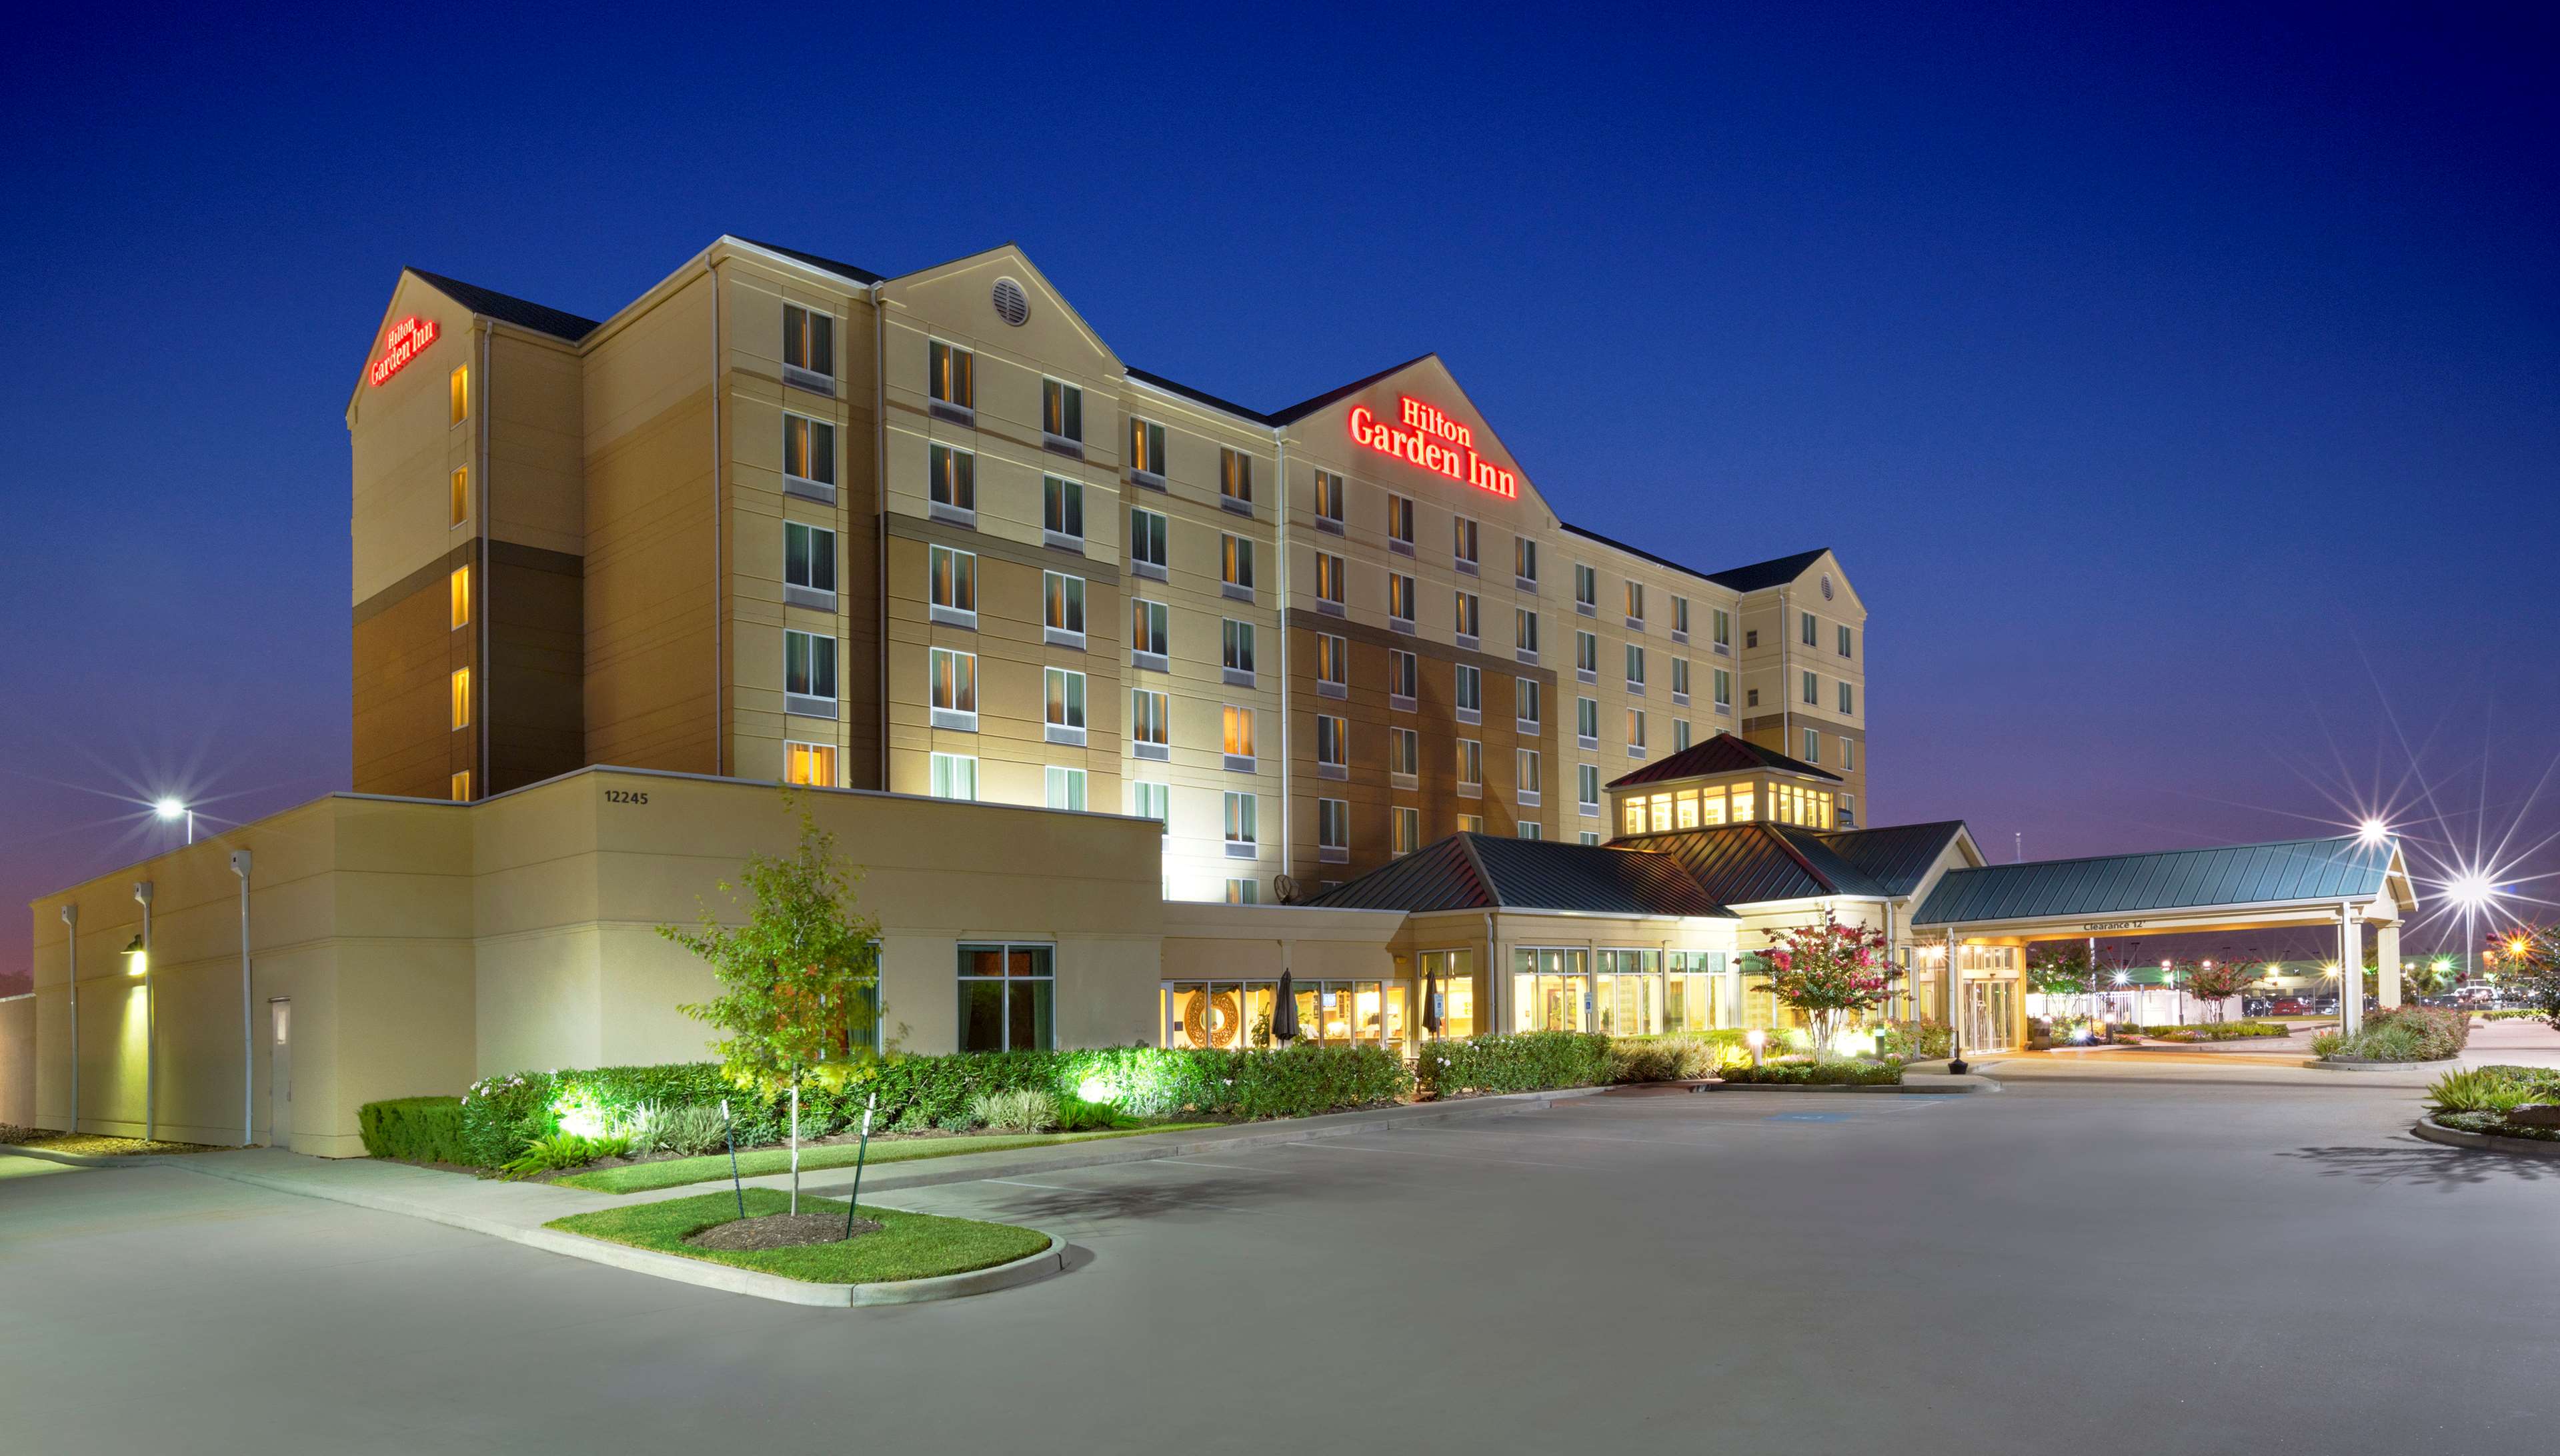 Hilton Garden Inn Houston Energy Corridor 12245 Katy Freeway Houston Tx Hotels And Motels